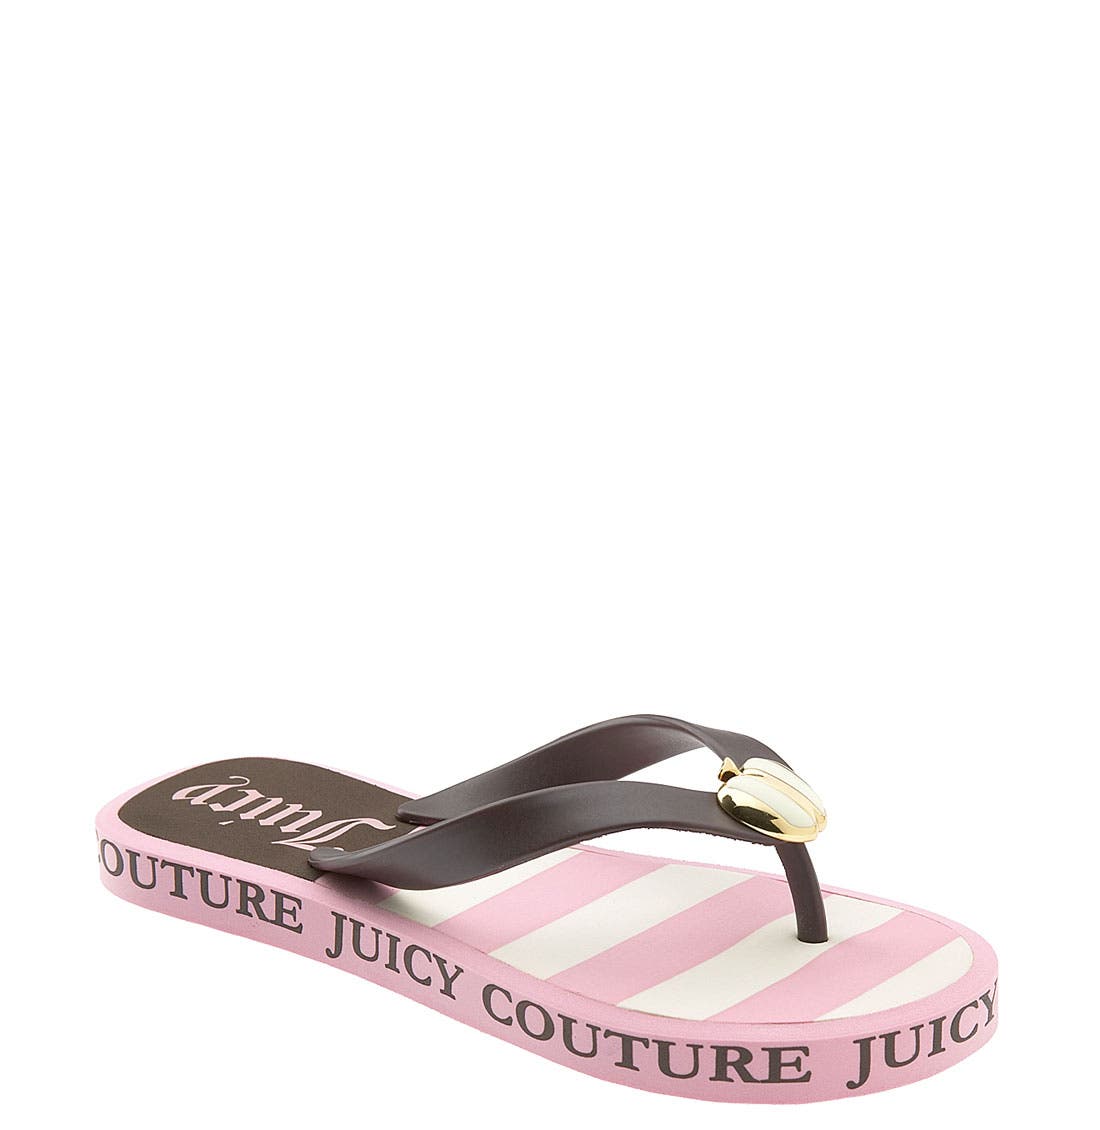 juicy couture flip flops kohl's